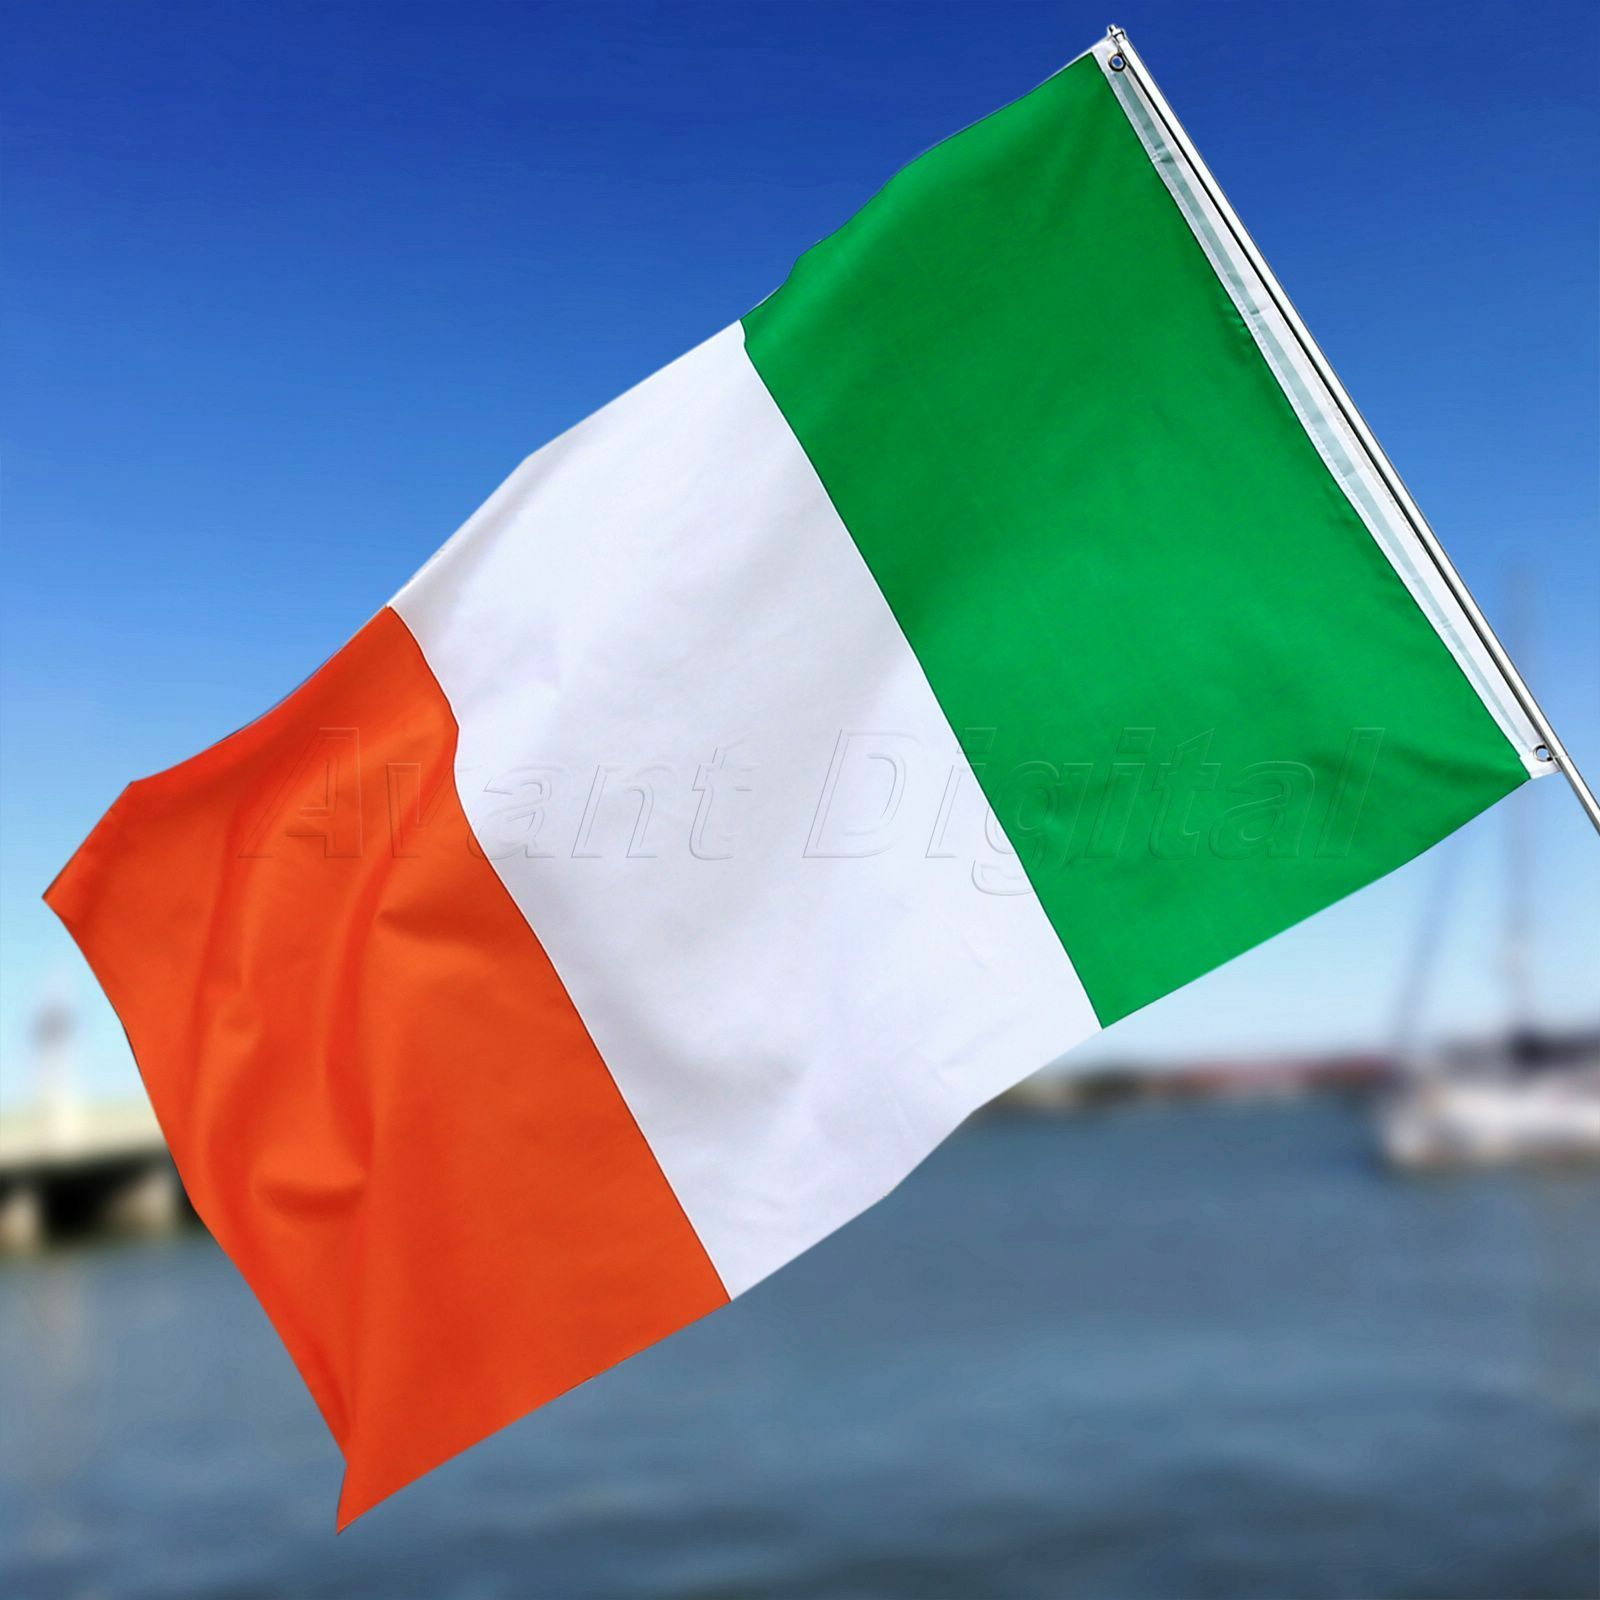 3' X 5' Irish Flag Ireland National Flag Country Banner Polyester Flag 90x 150cm